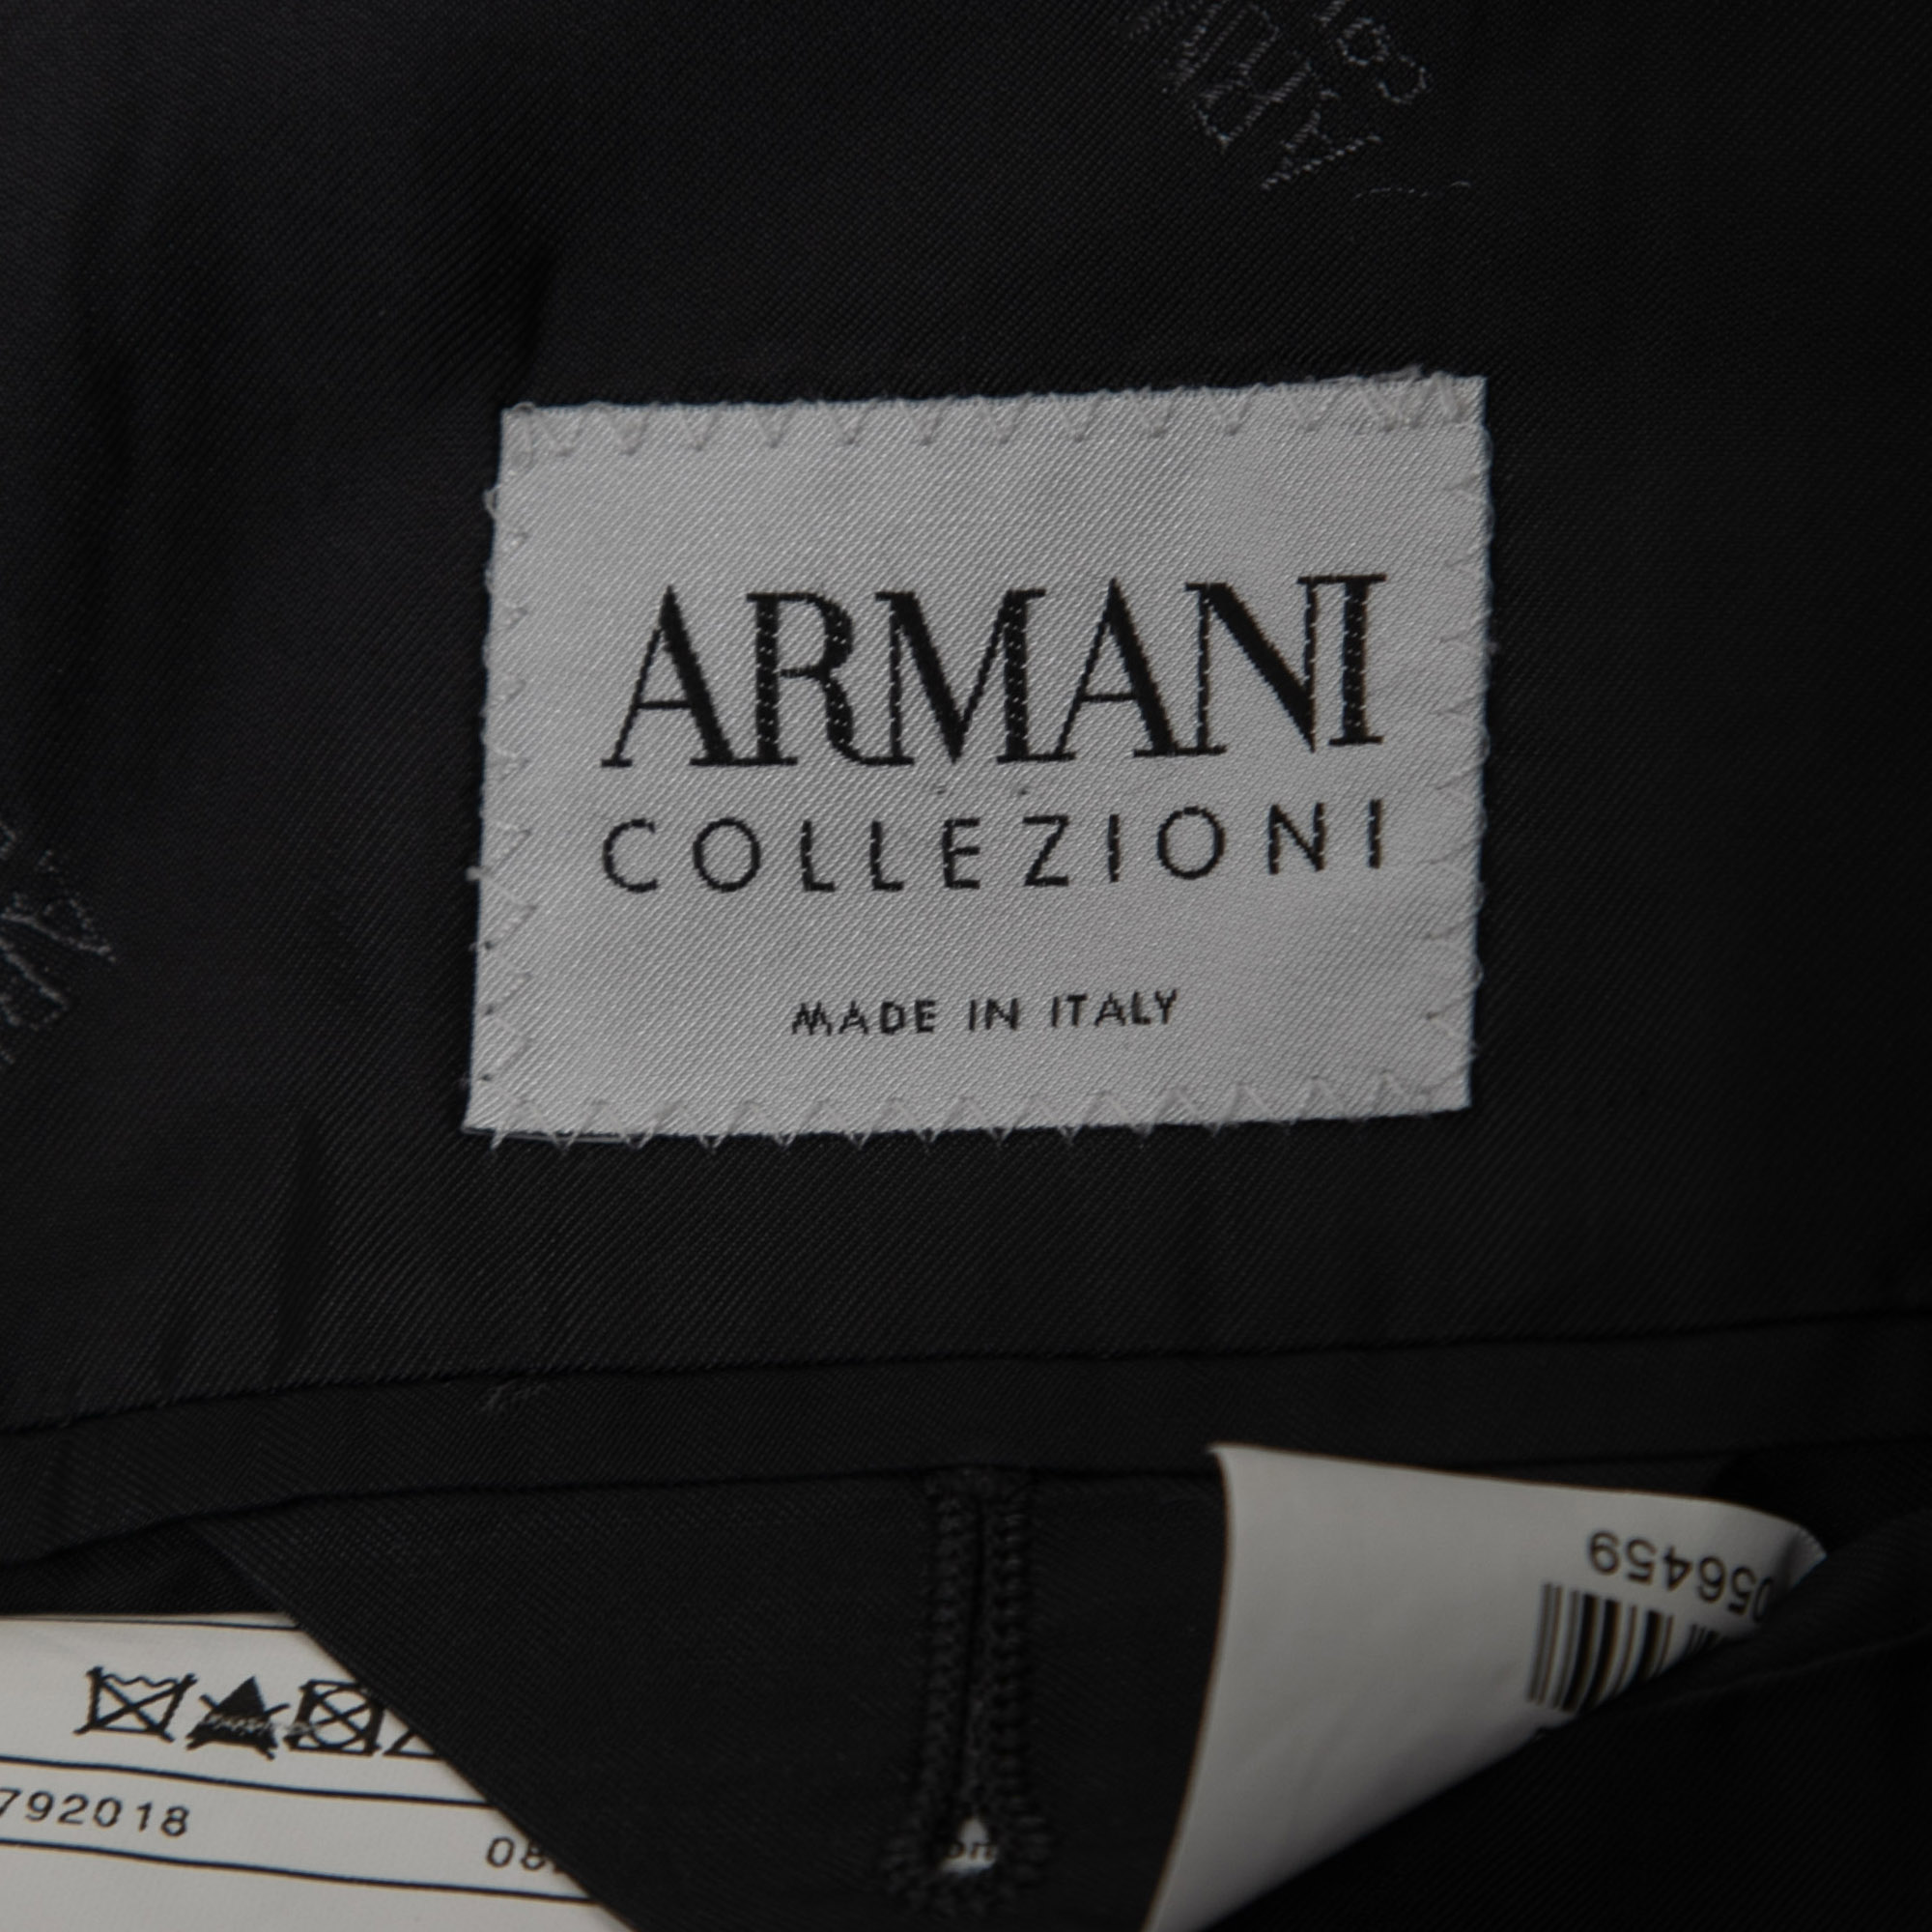 Armani Collezioni Black Textured Wool Single-Breasted Blazer XL